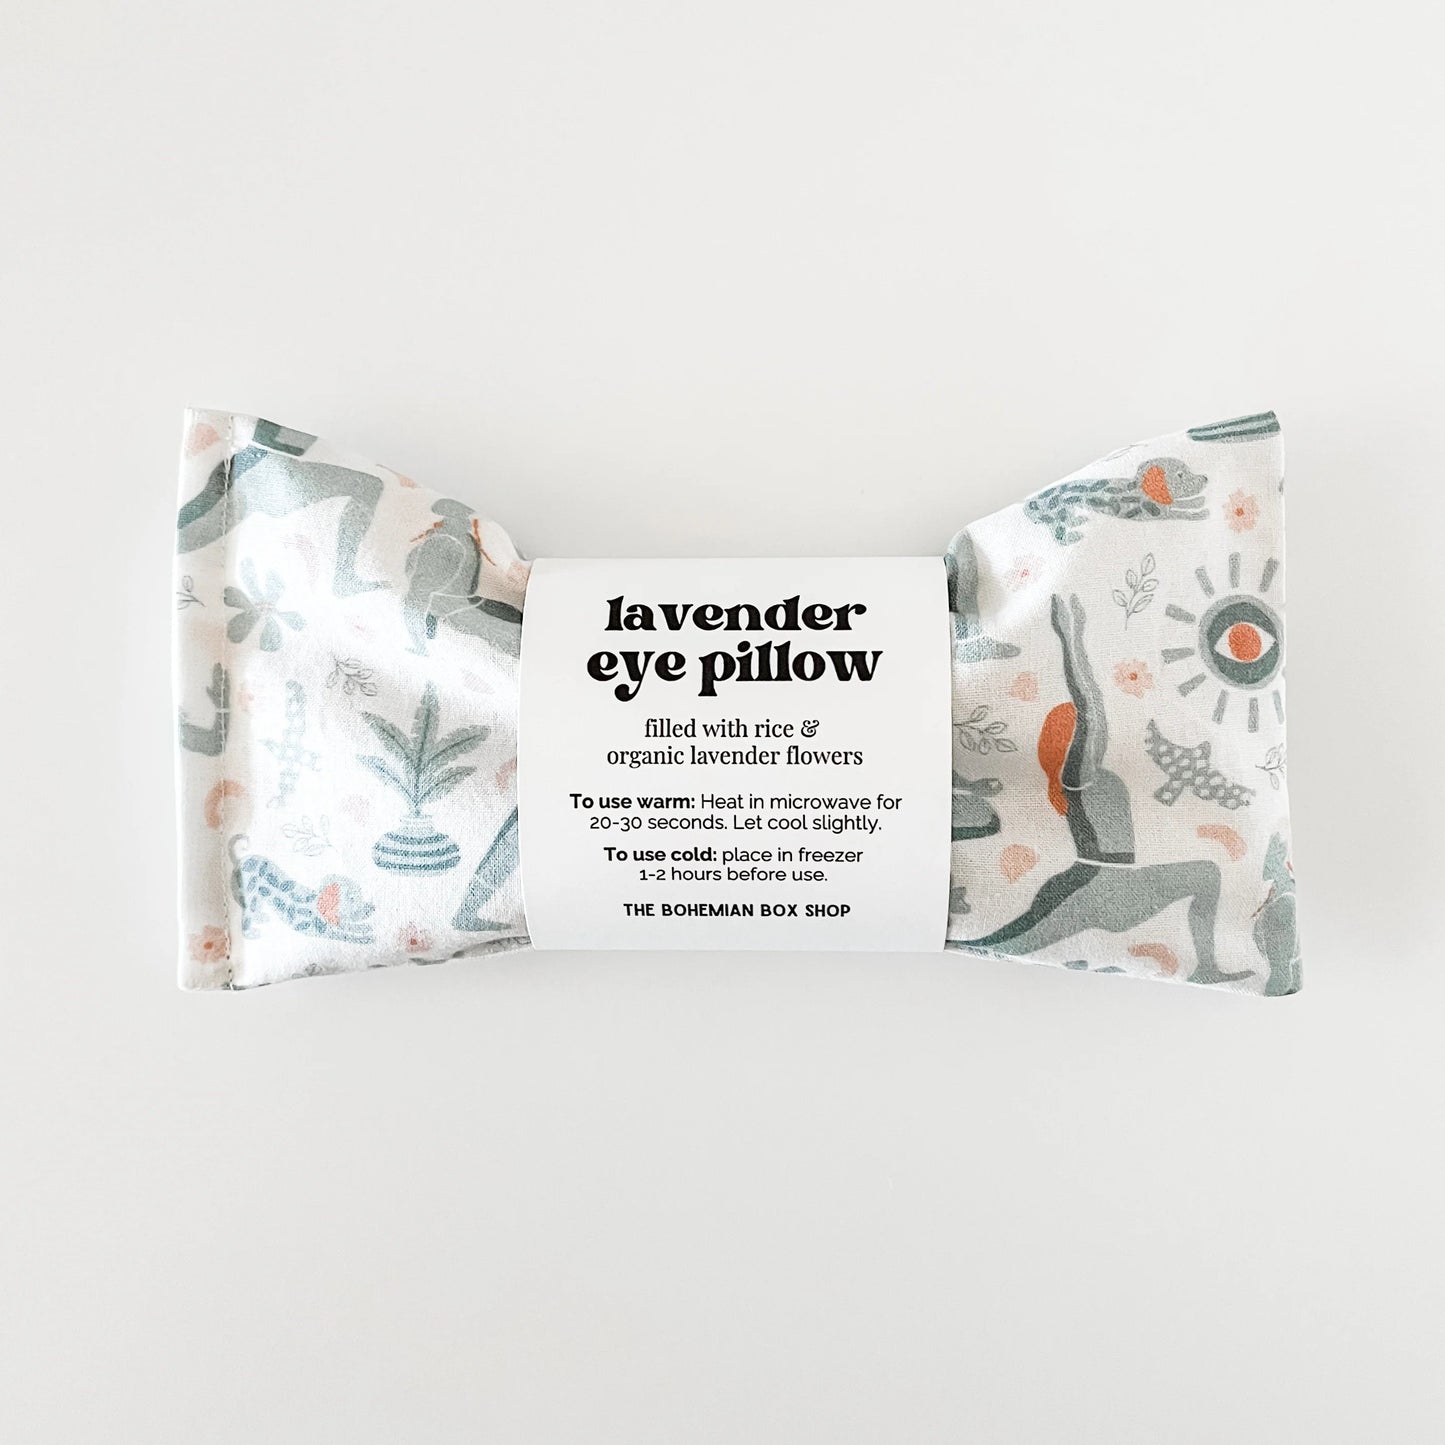 Serene & Mindful Yoga Lavender Eye Pillow - Microwaveable Rice Packs